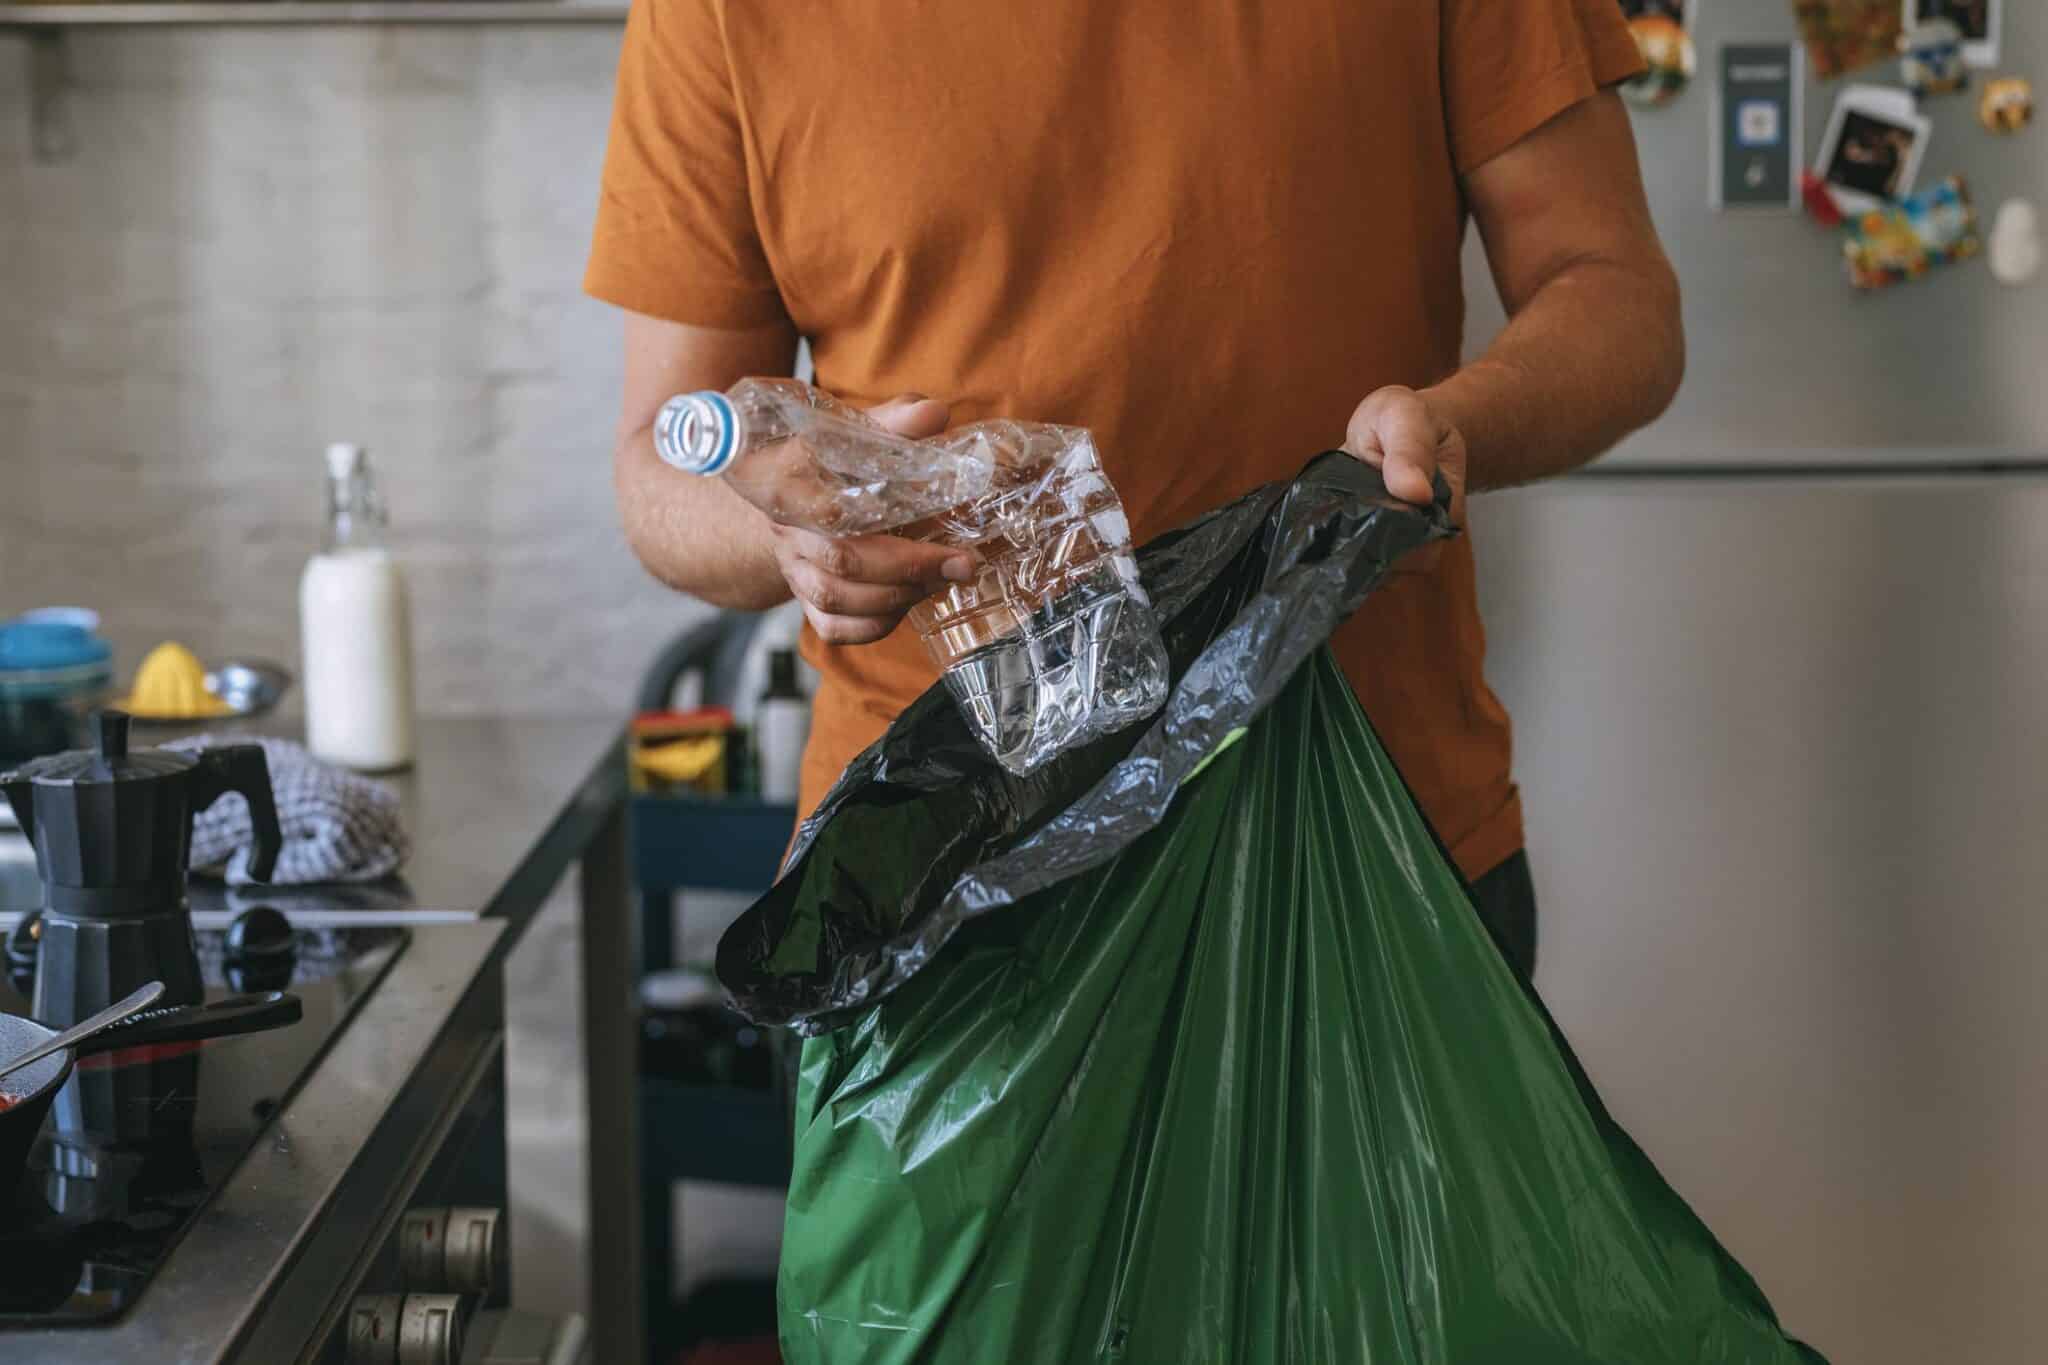 Best Biodegradable Trash Bags 2023